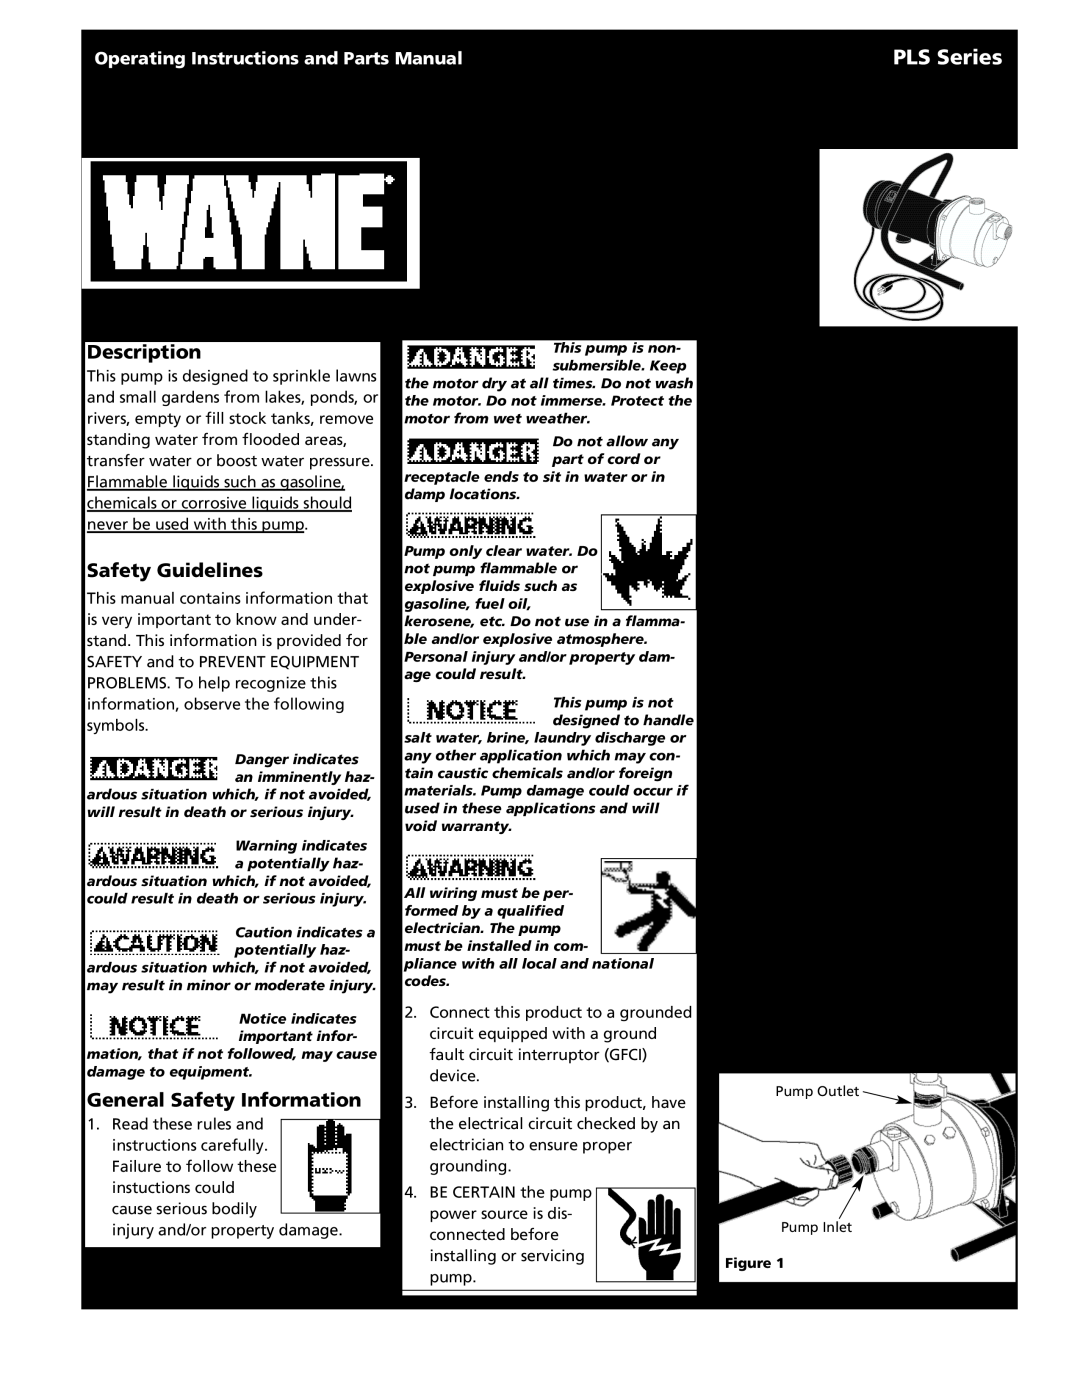 Wayne 321602-001 warranty PLS Series, Description, Safety Guidelines, General Safety Information, Installation 